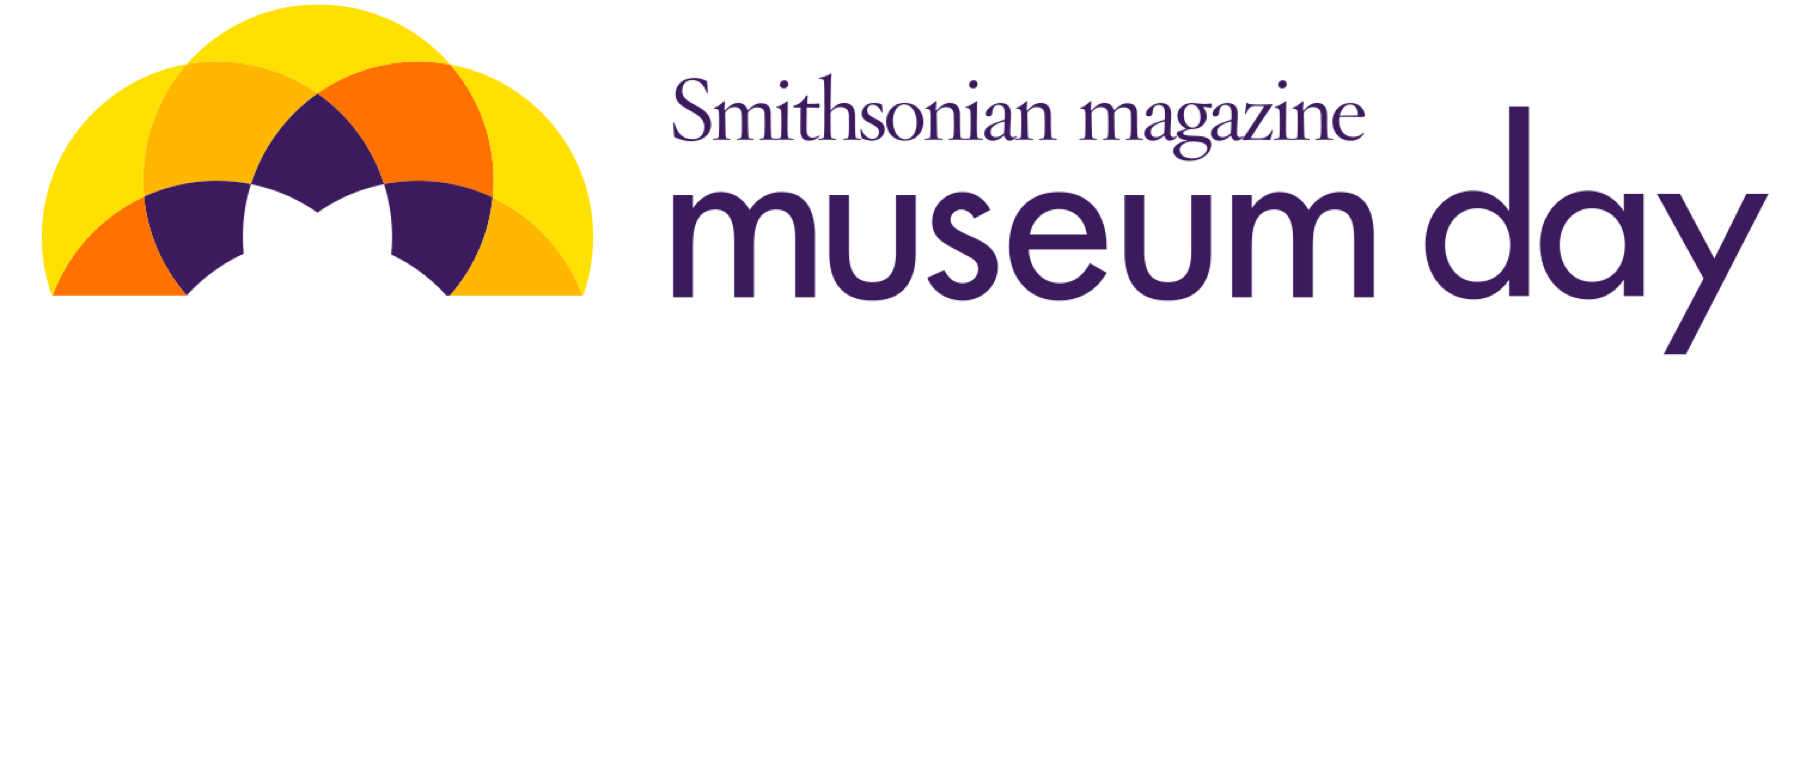 Smithsonian Magazine Logo